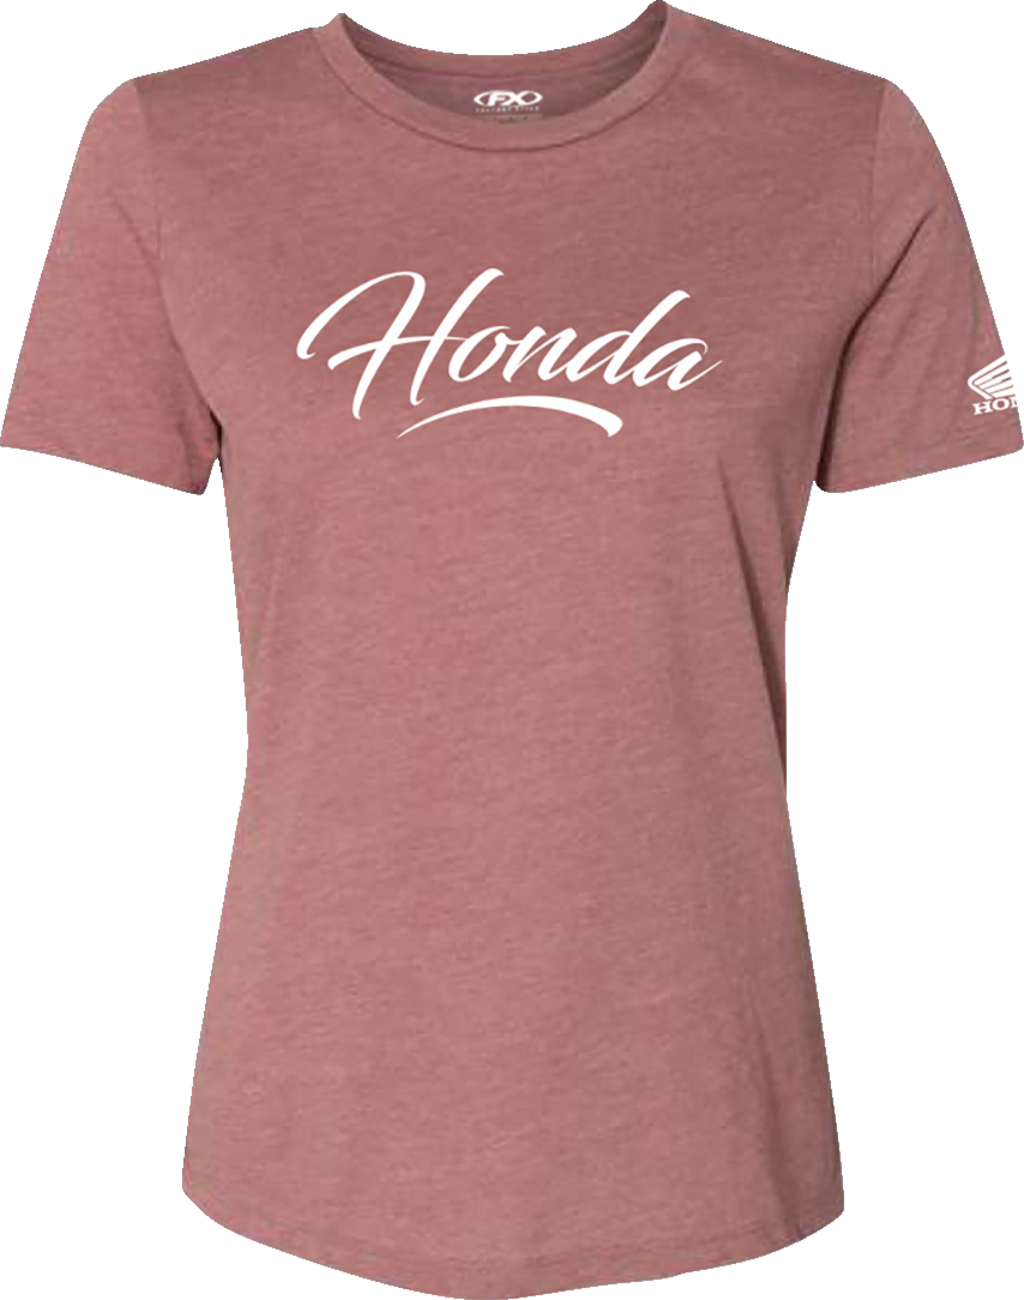 FACTORY EFFEX Women's Honda Script T-Shirt - Heather Mauve - Small 27-87340